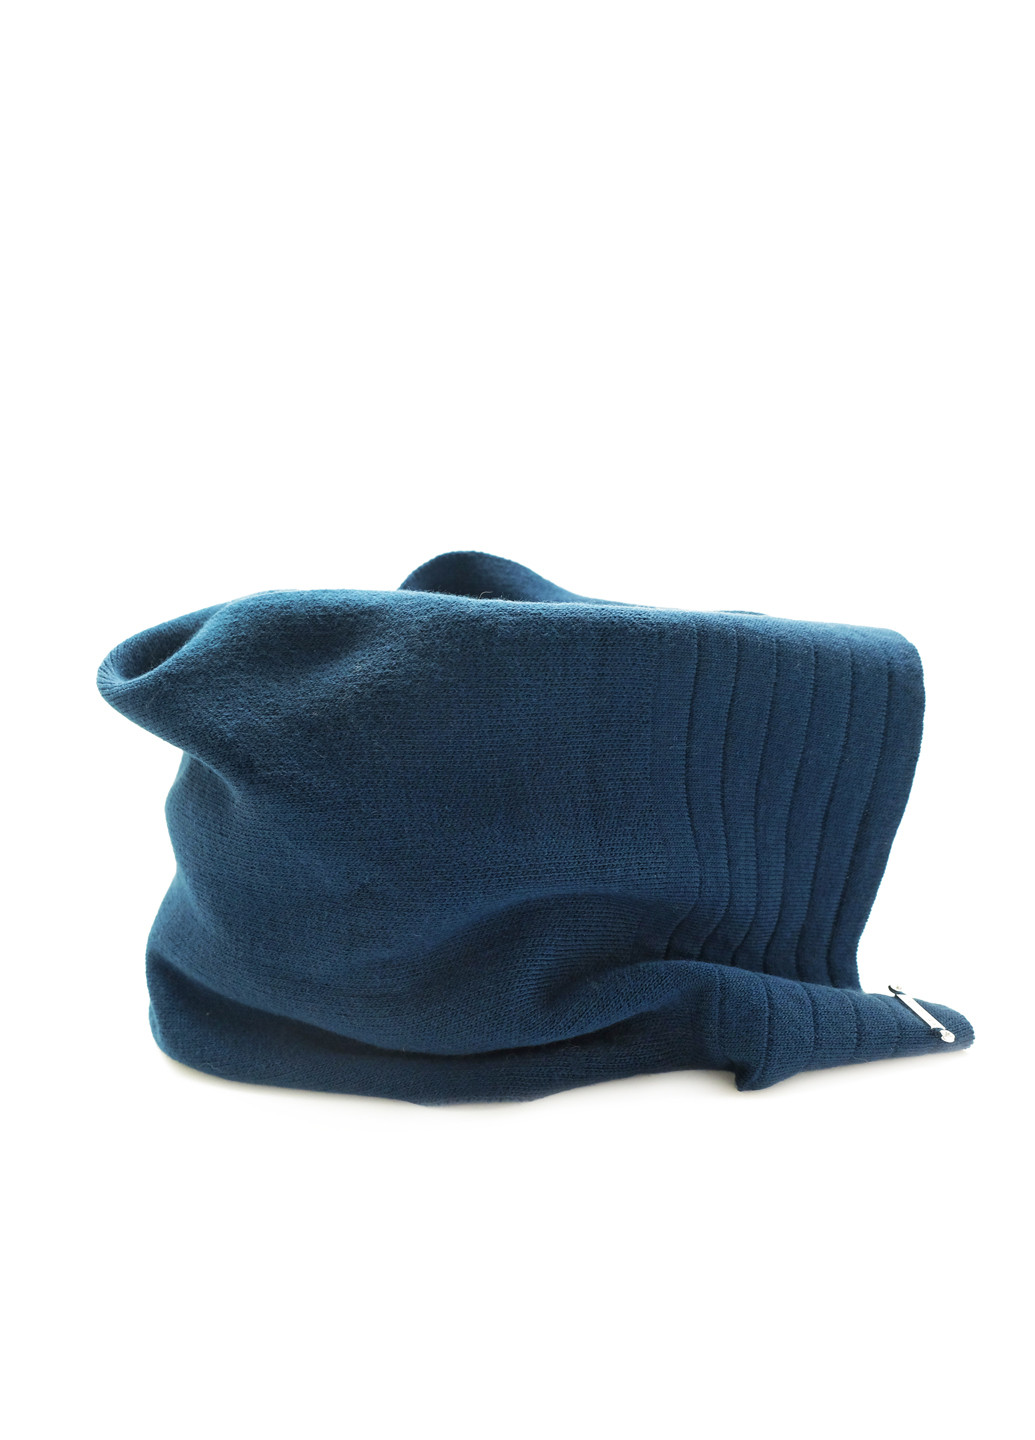 Синий демисезонный комплект (шапка, шарф) Pawonex